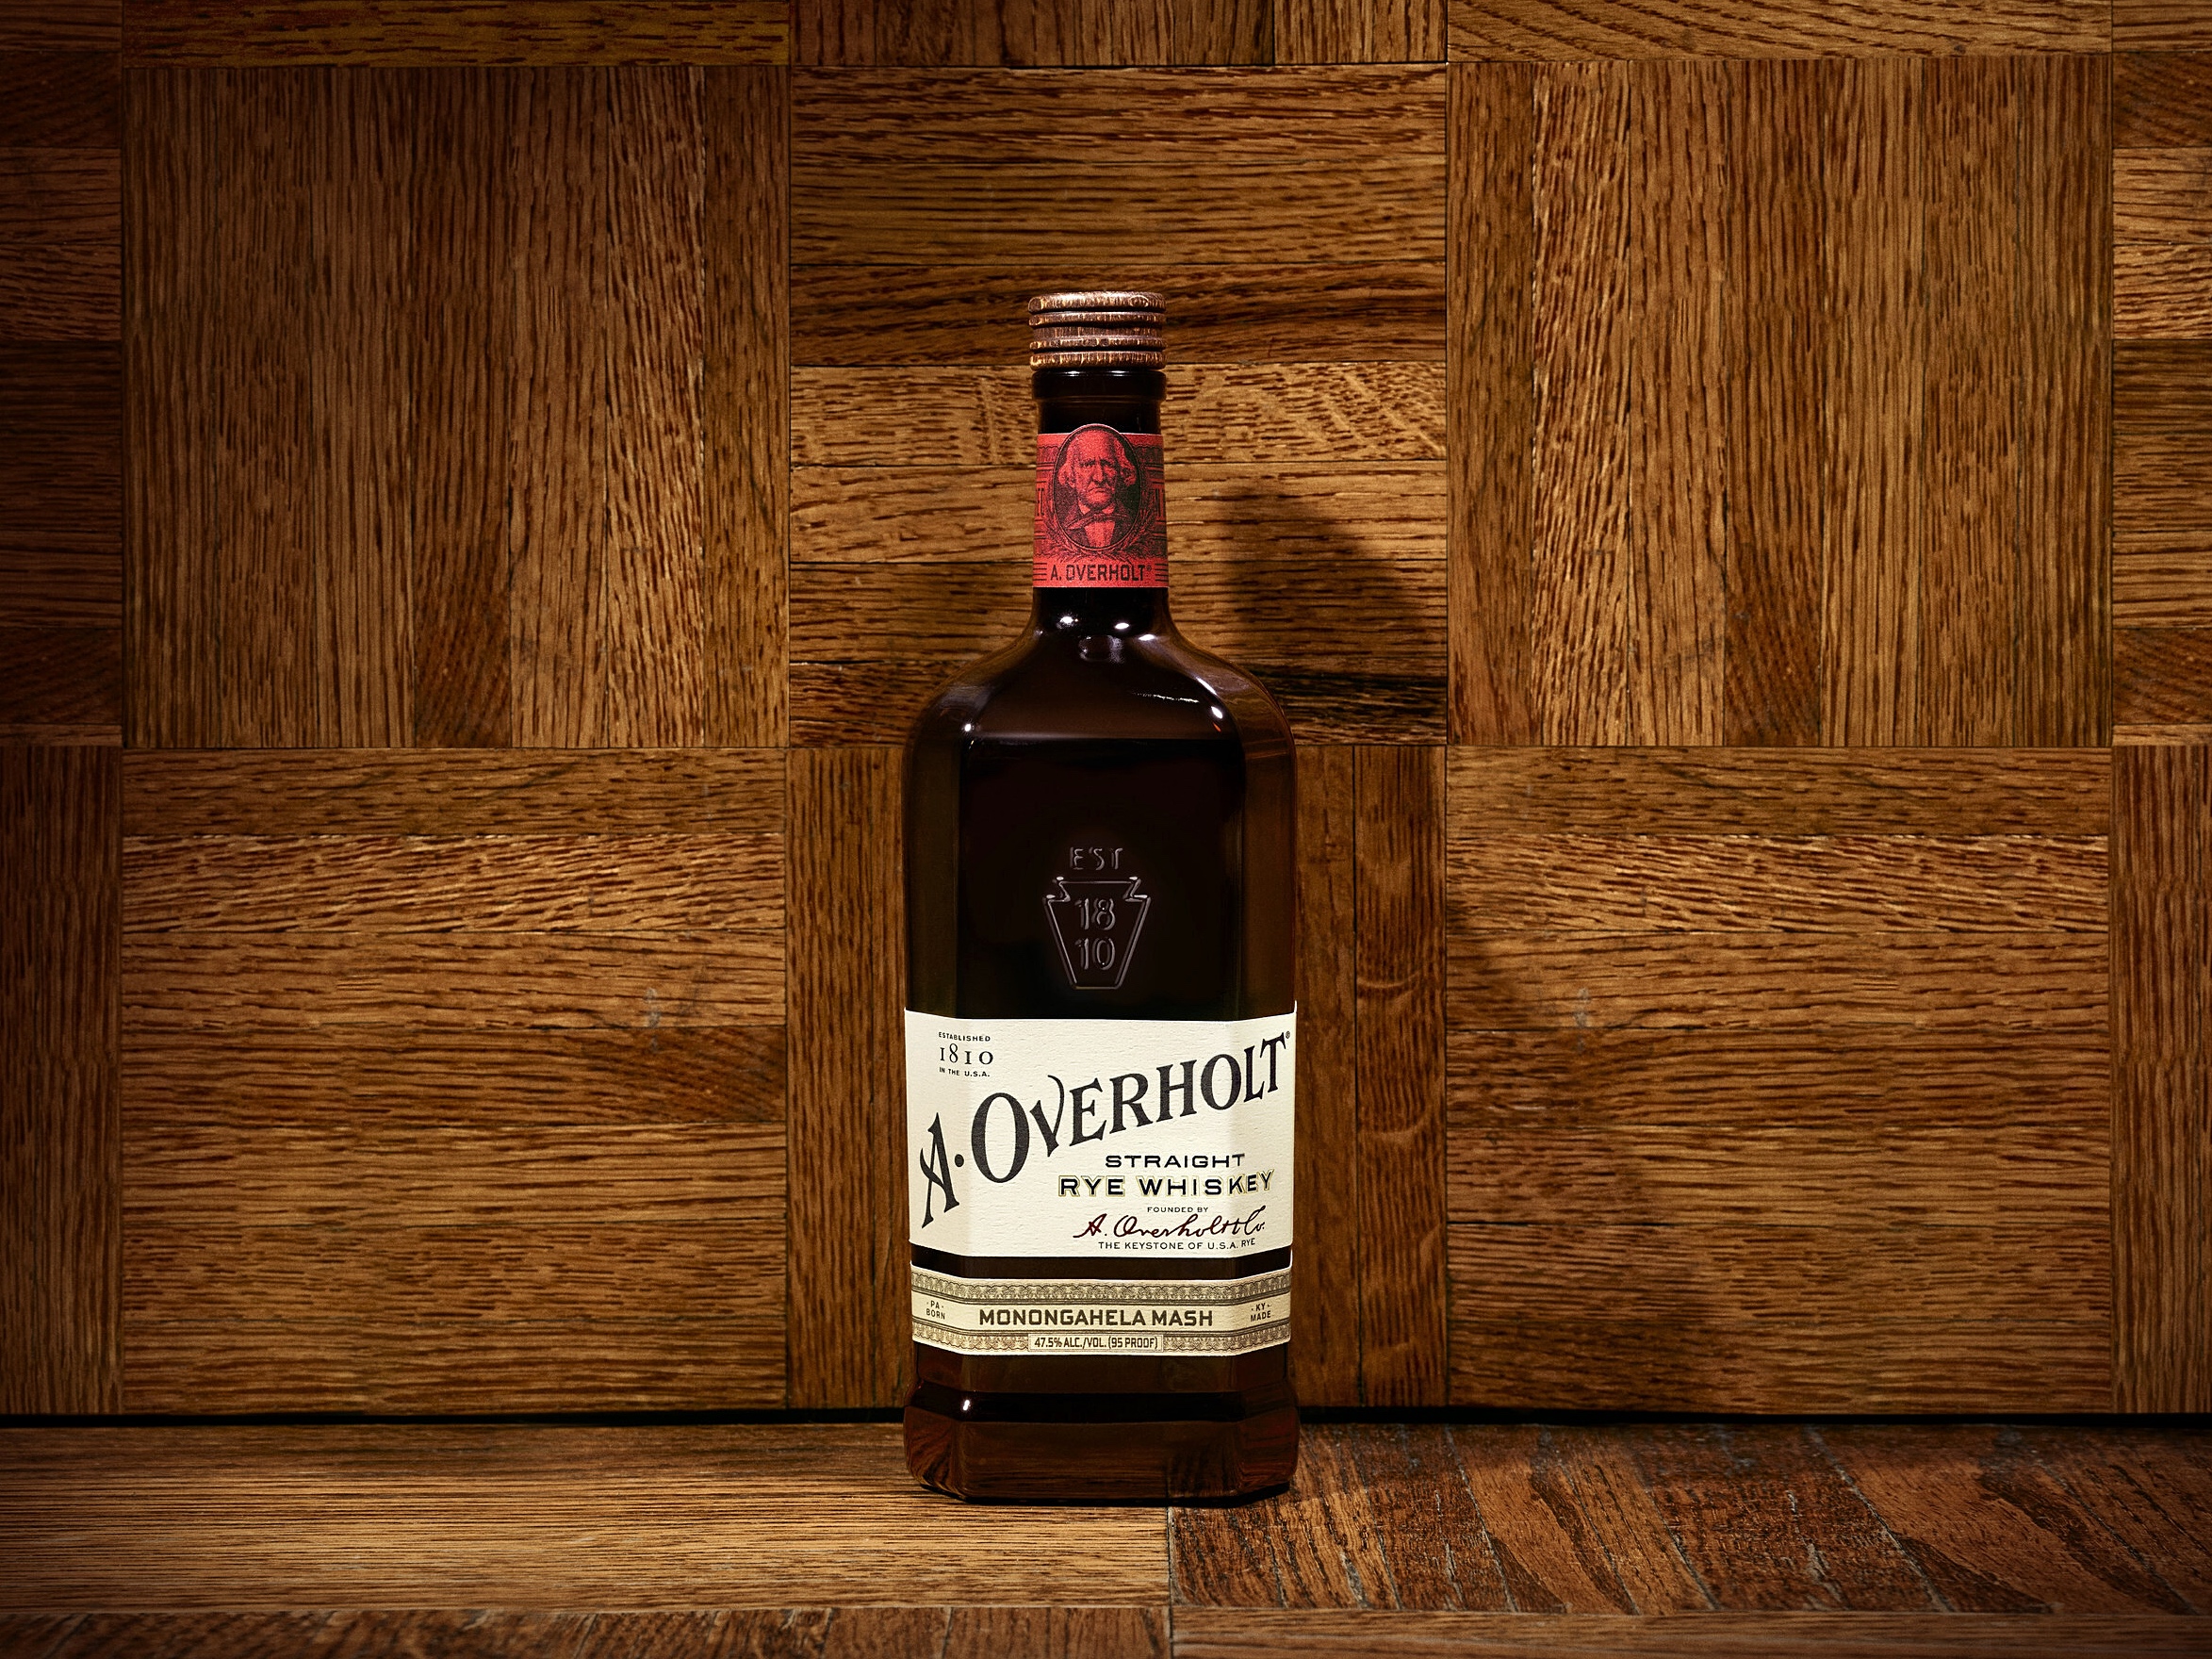 Overholt’s New Monongahela Mash Rye Whiskey Launches Nationwide